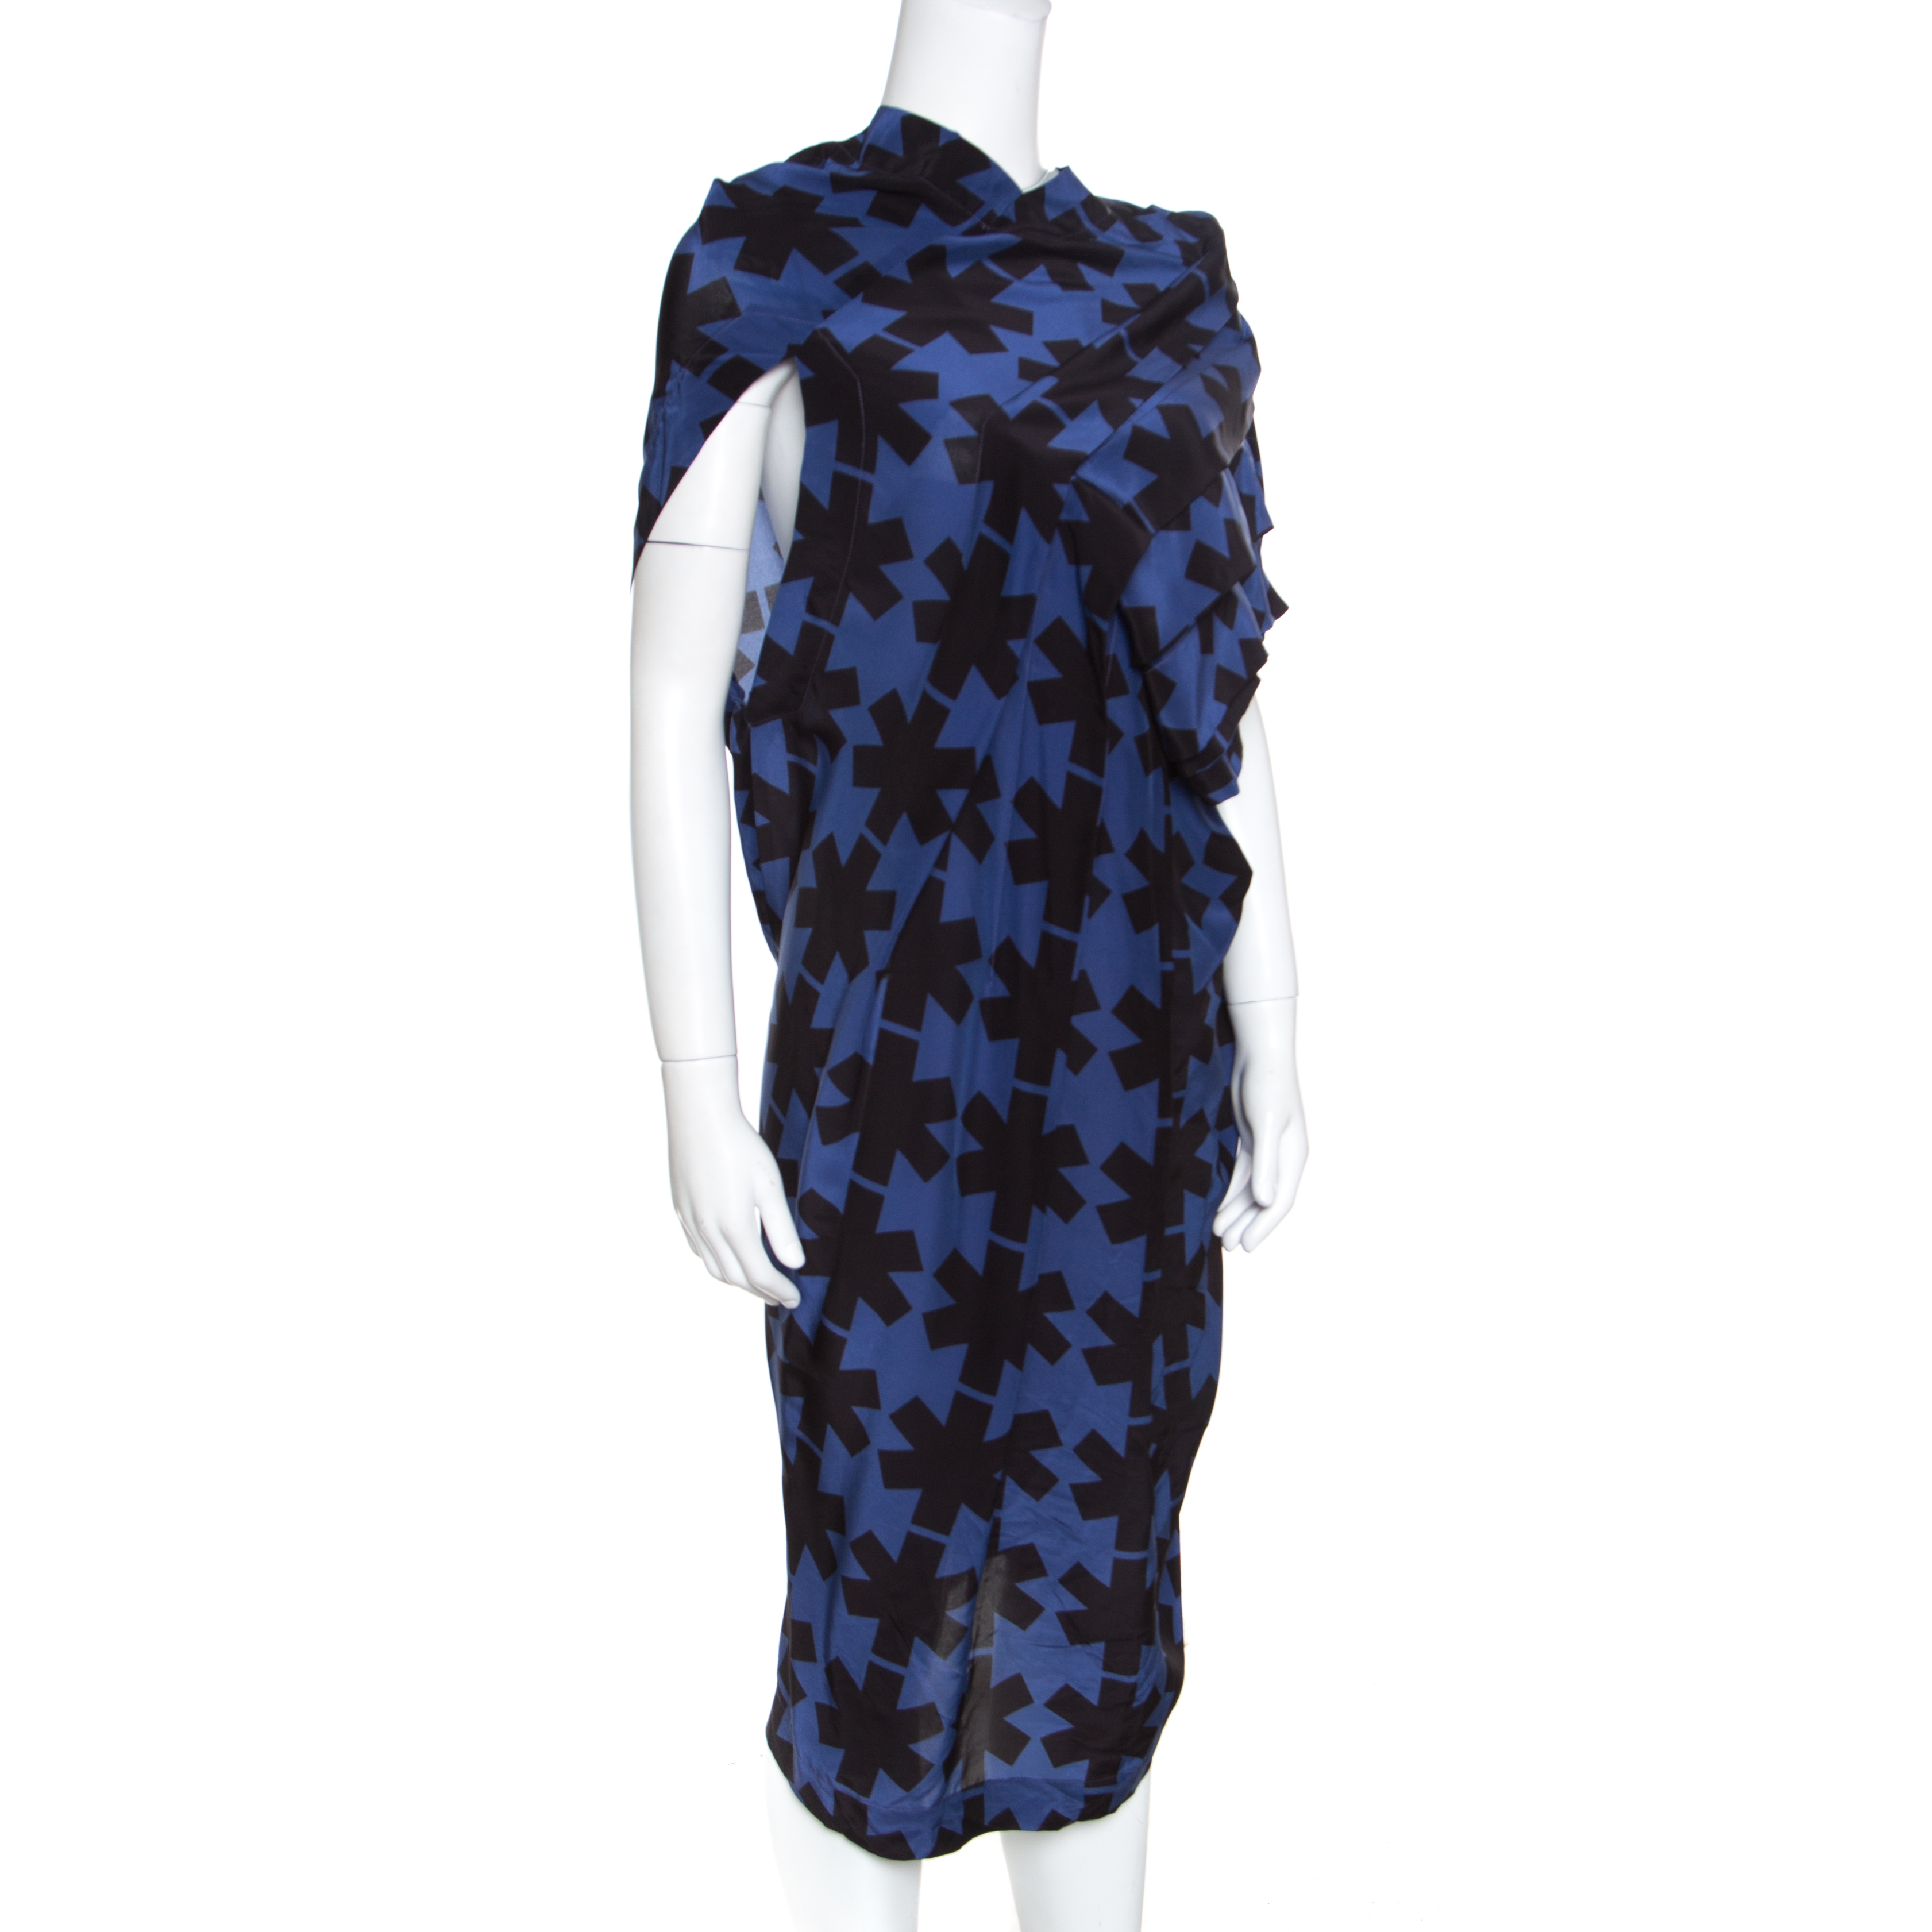 

Vivienne Westwood Anglomania Blue and Black Printed Draped Asymmetric Dress